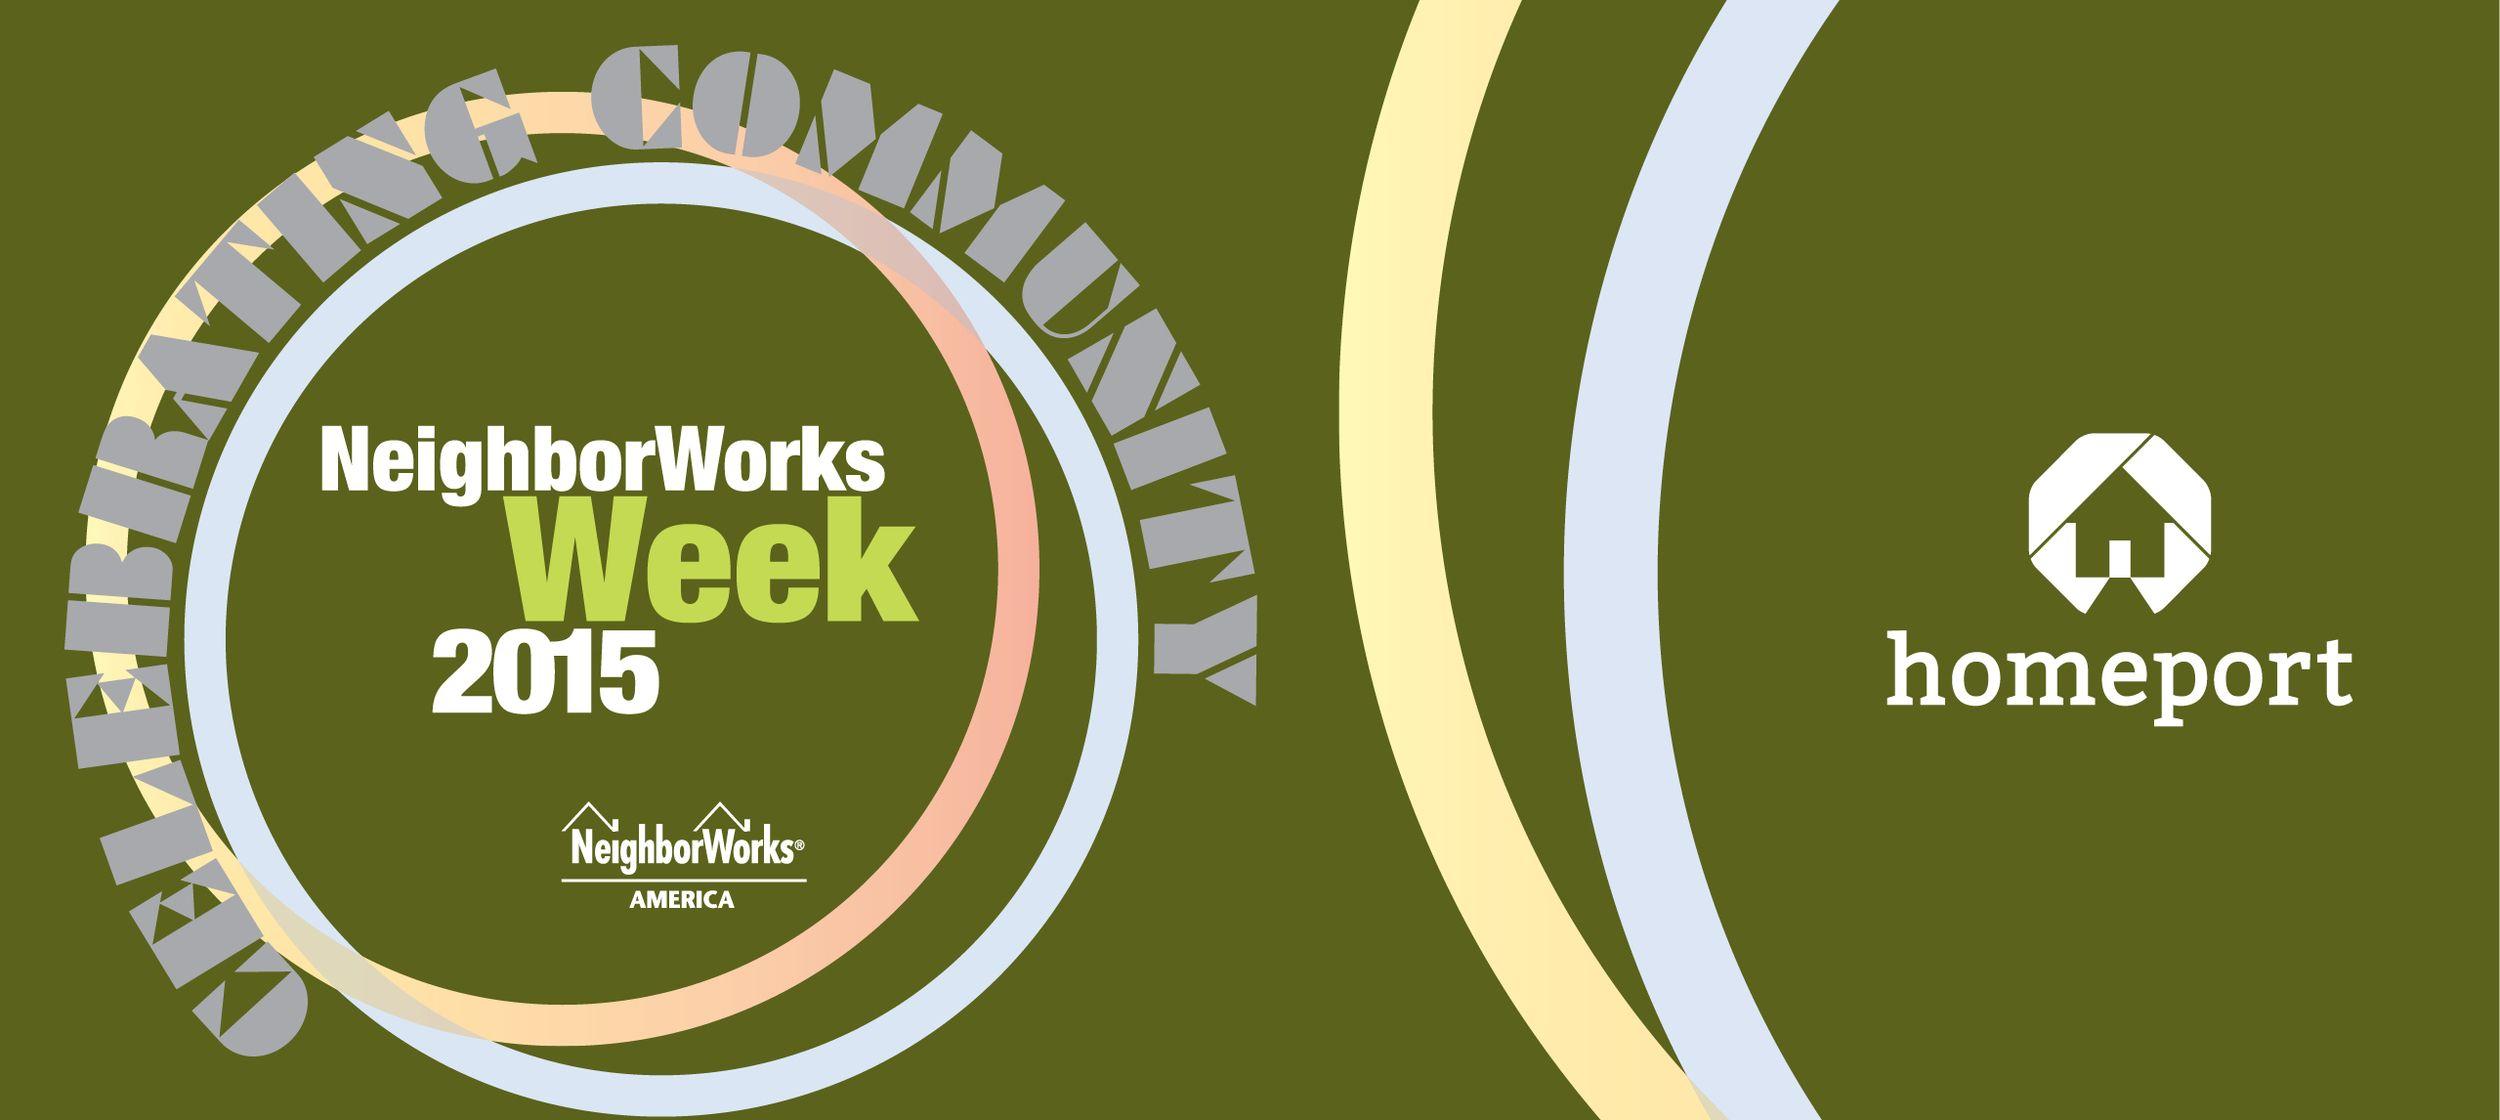 NeighborWorks Green Organization Logo - NeighborWorks Week Highlights Homeownership